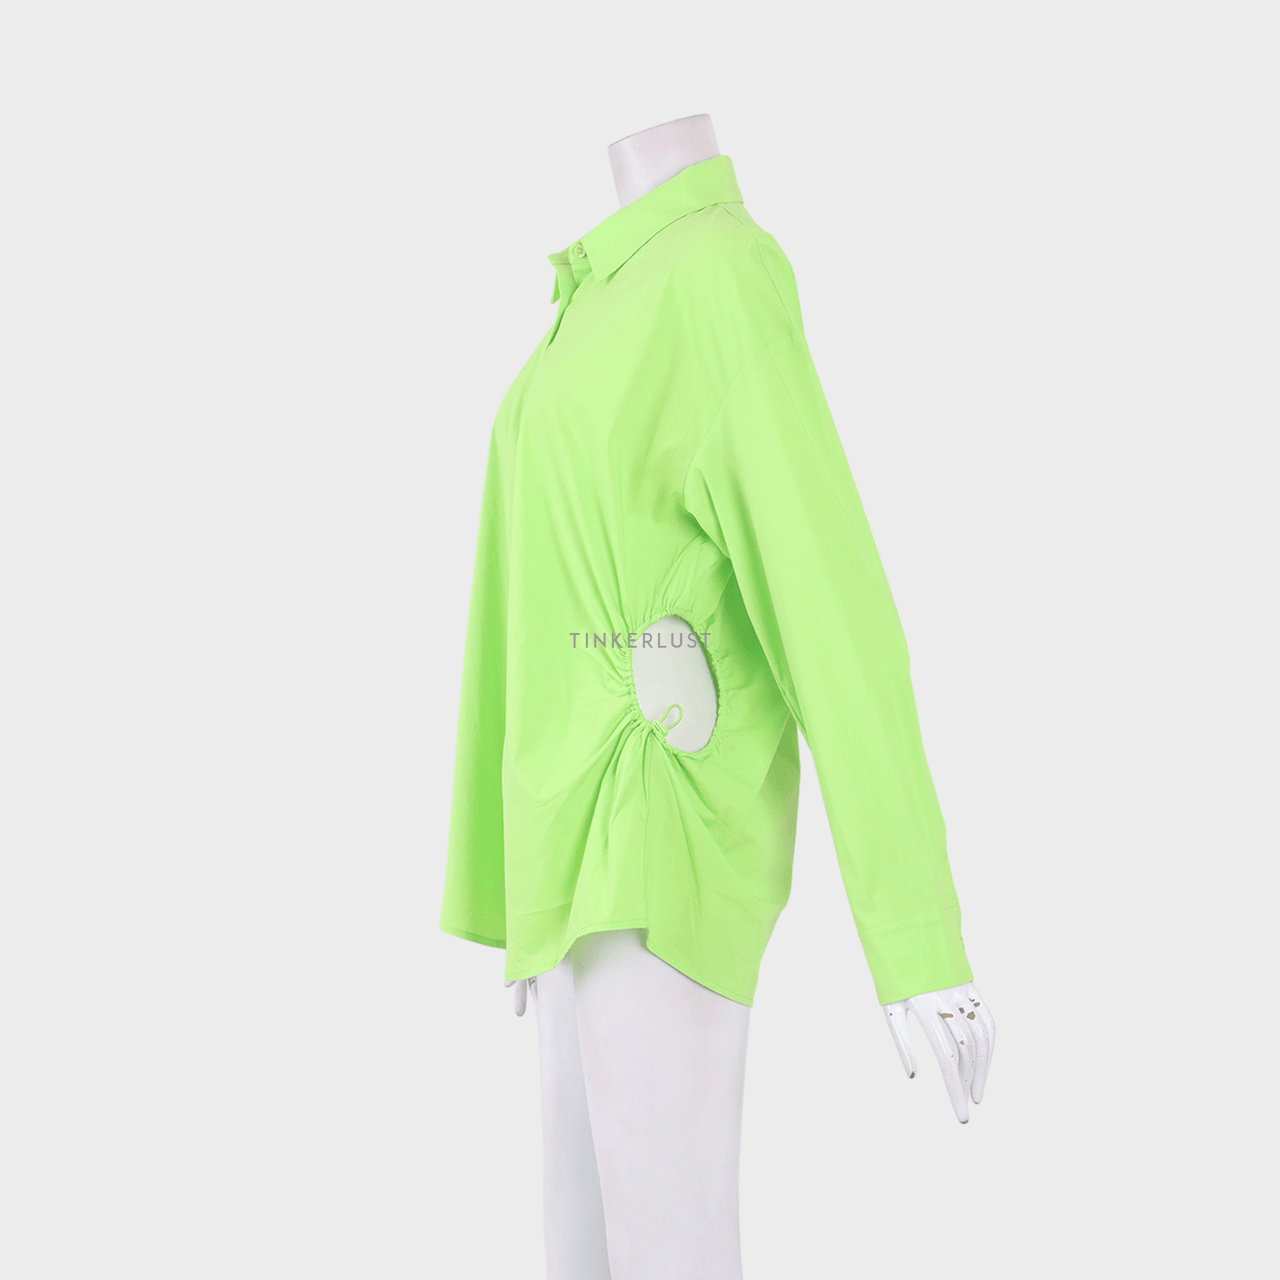 3Mongkis Green Neon Shirt